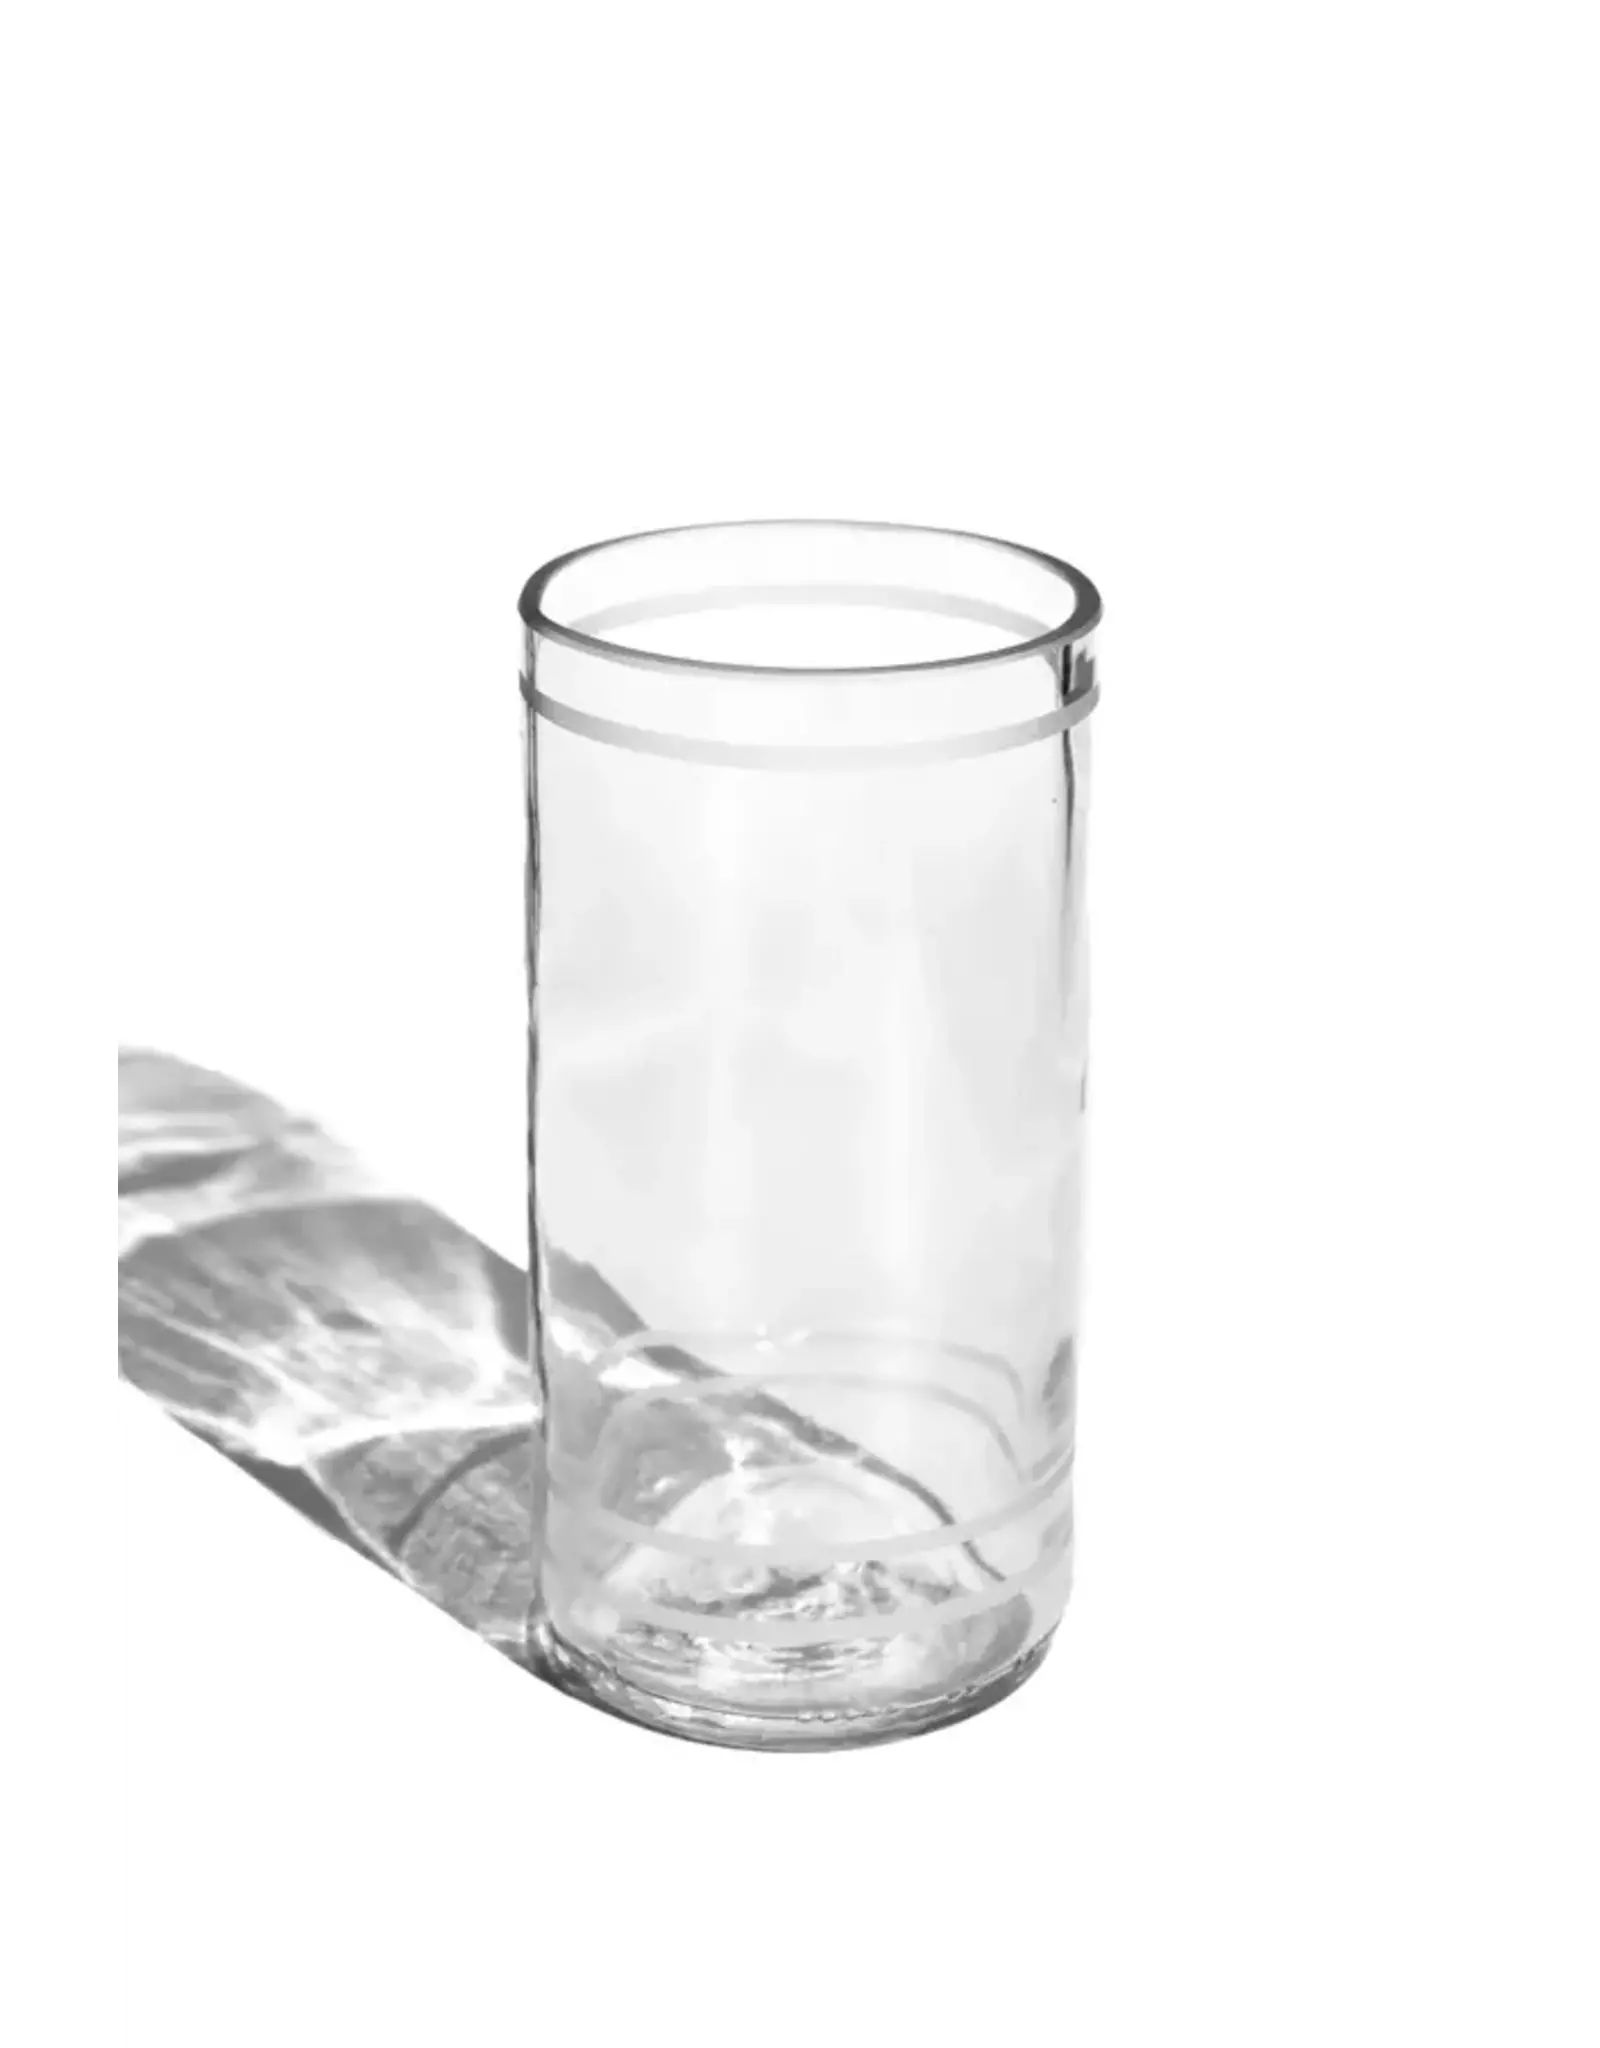 Egypt Upcycled Estekana Drinking Glass - Clear, Egypt